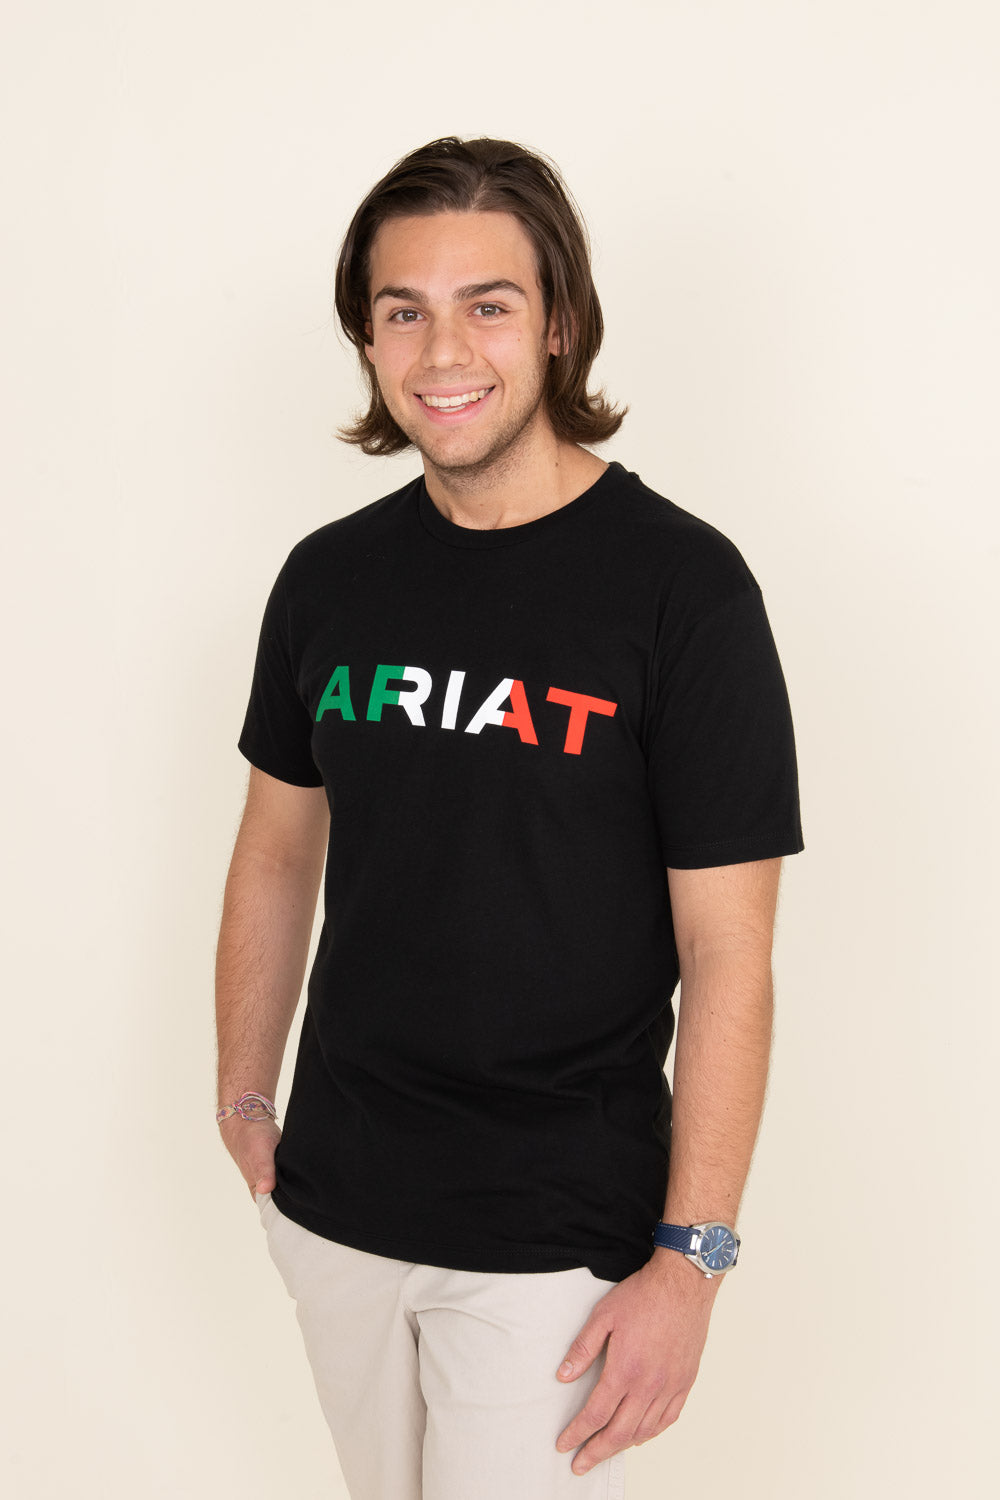 Ariat Mexico Green T-shirt